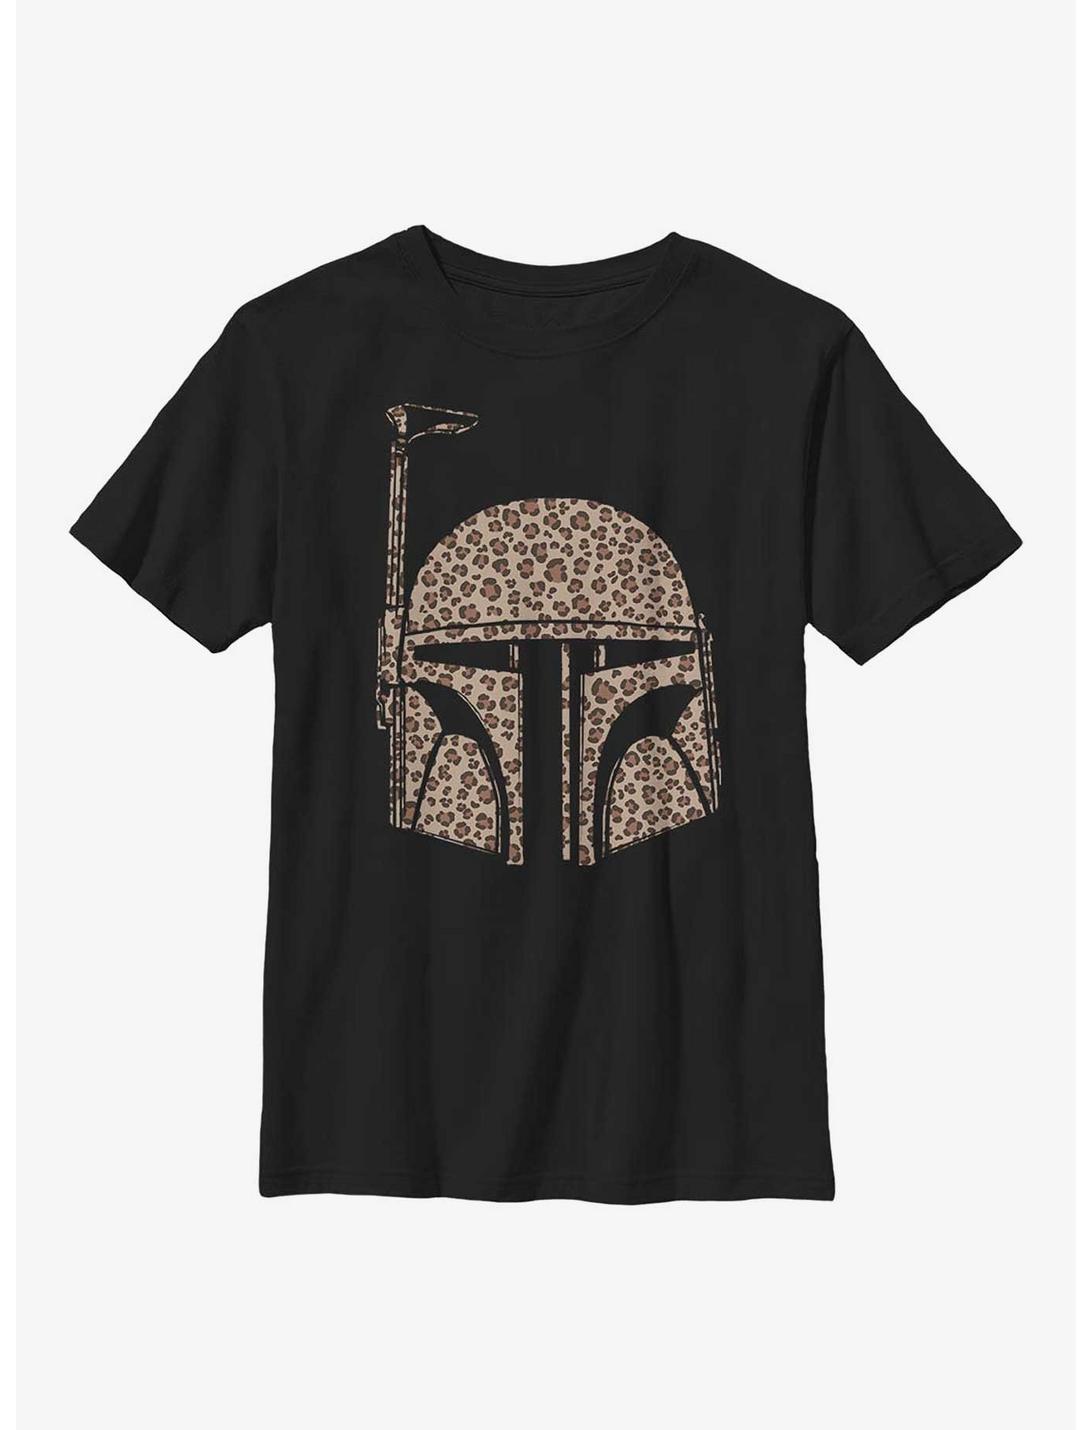 Star Wars Boba Fett Cheetah Youth T-Shirt, BLACK, hi-res